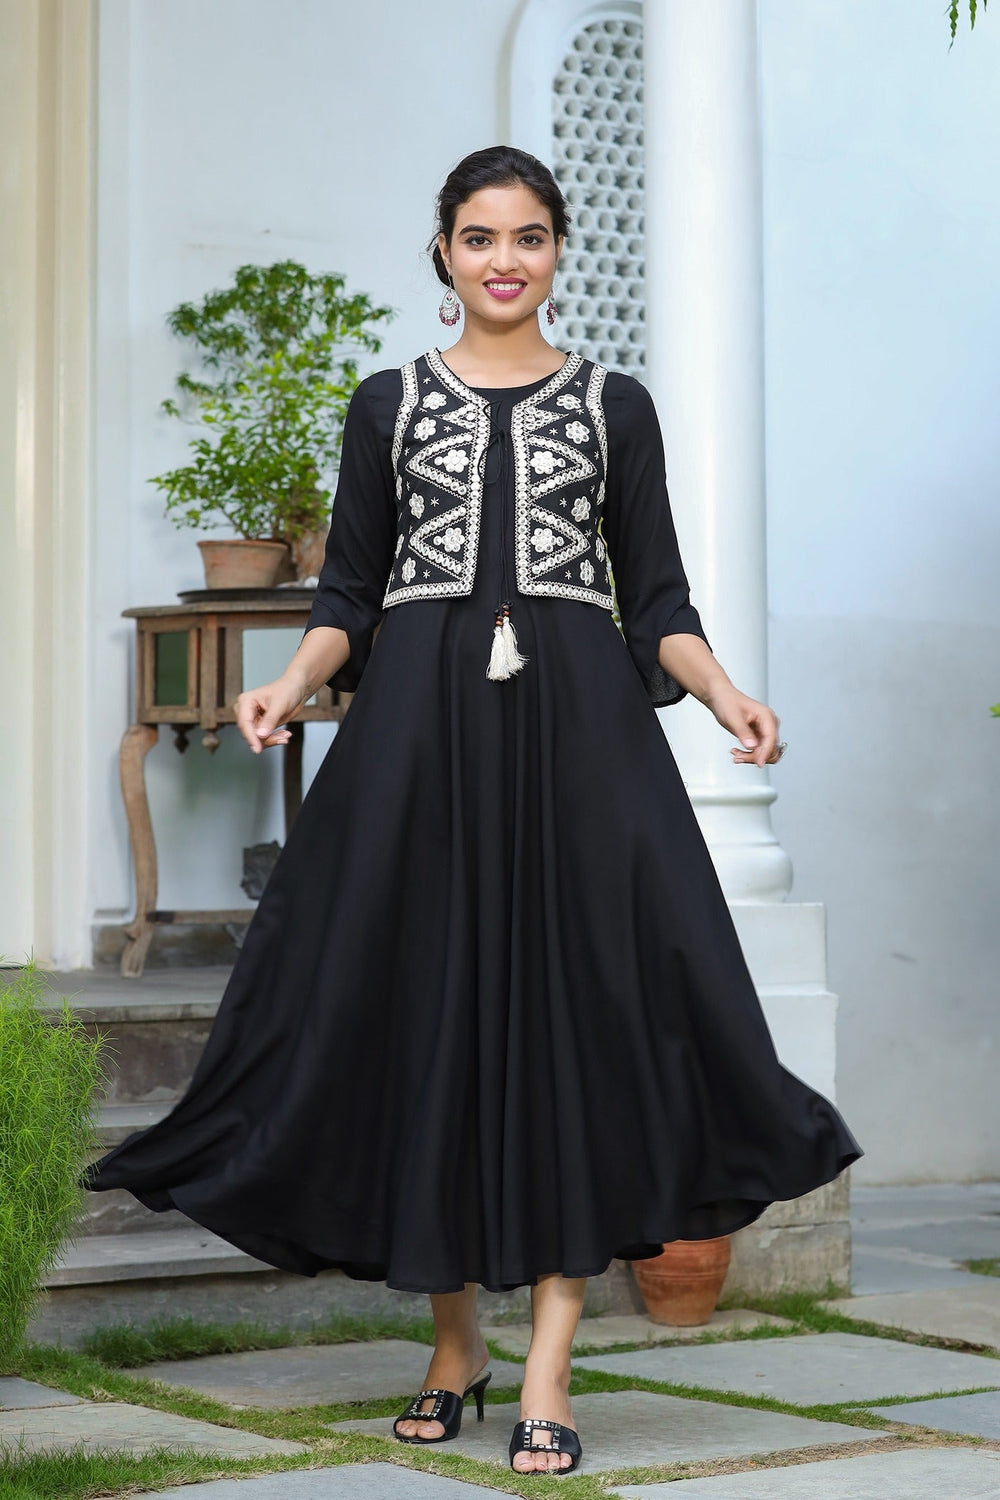 Black A-Line Dress With Jacket-Yufta Store-9403DRSBKS